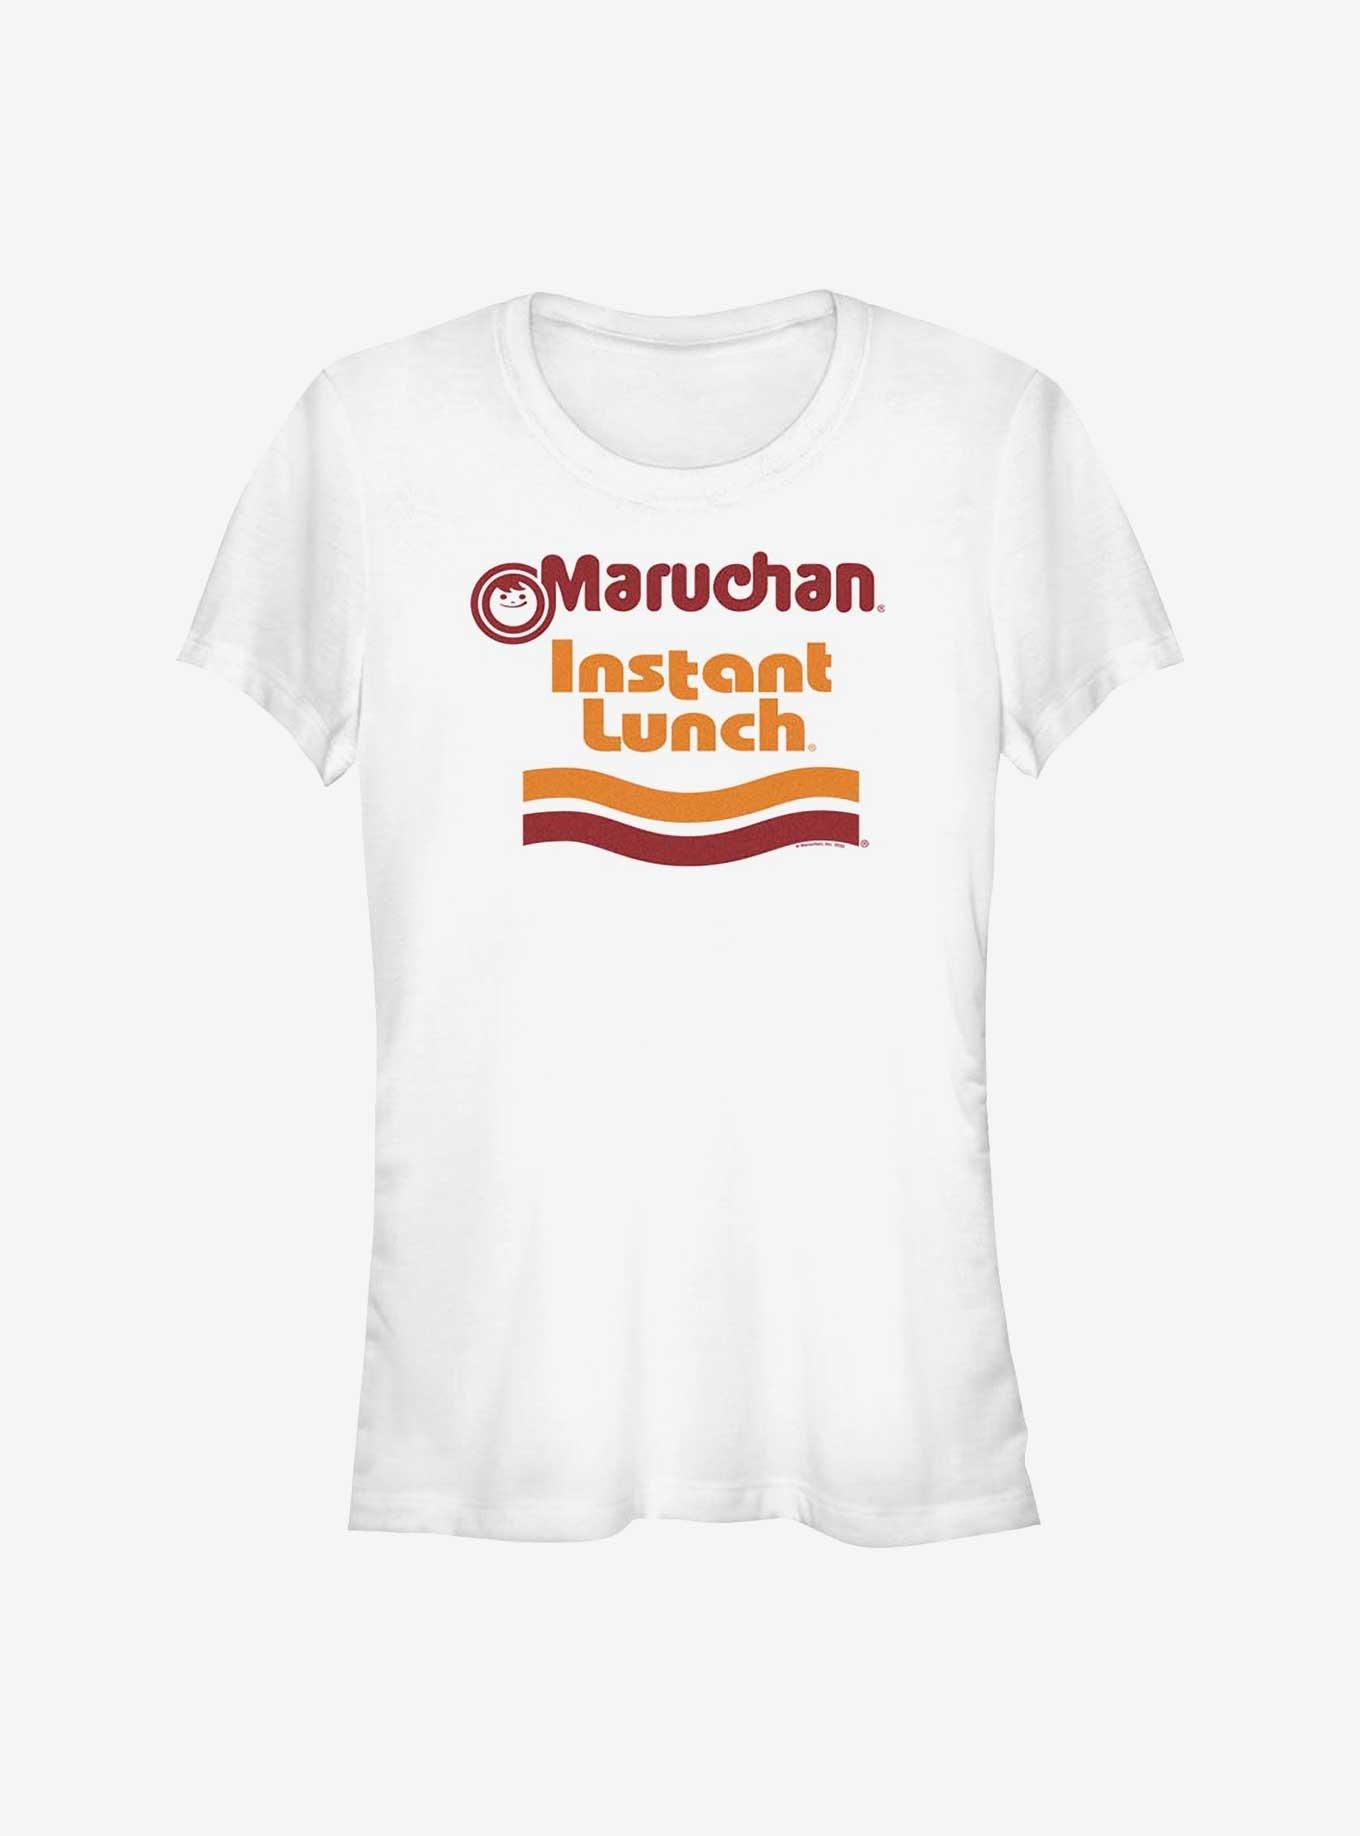 Maruchan Instant Lunch-25 Girls T-Shirt